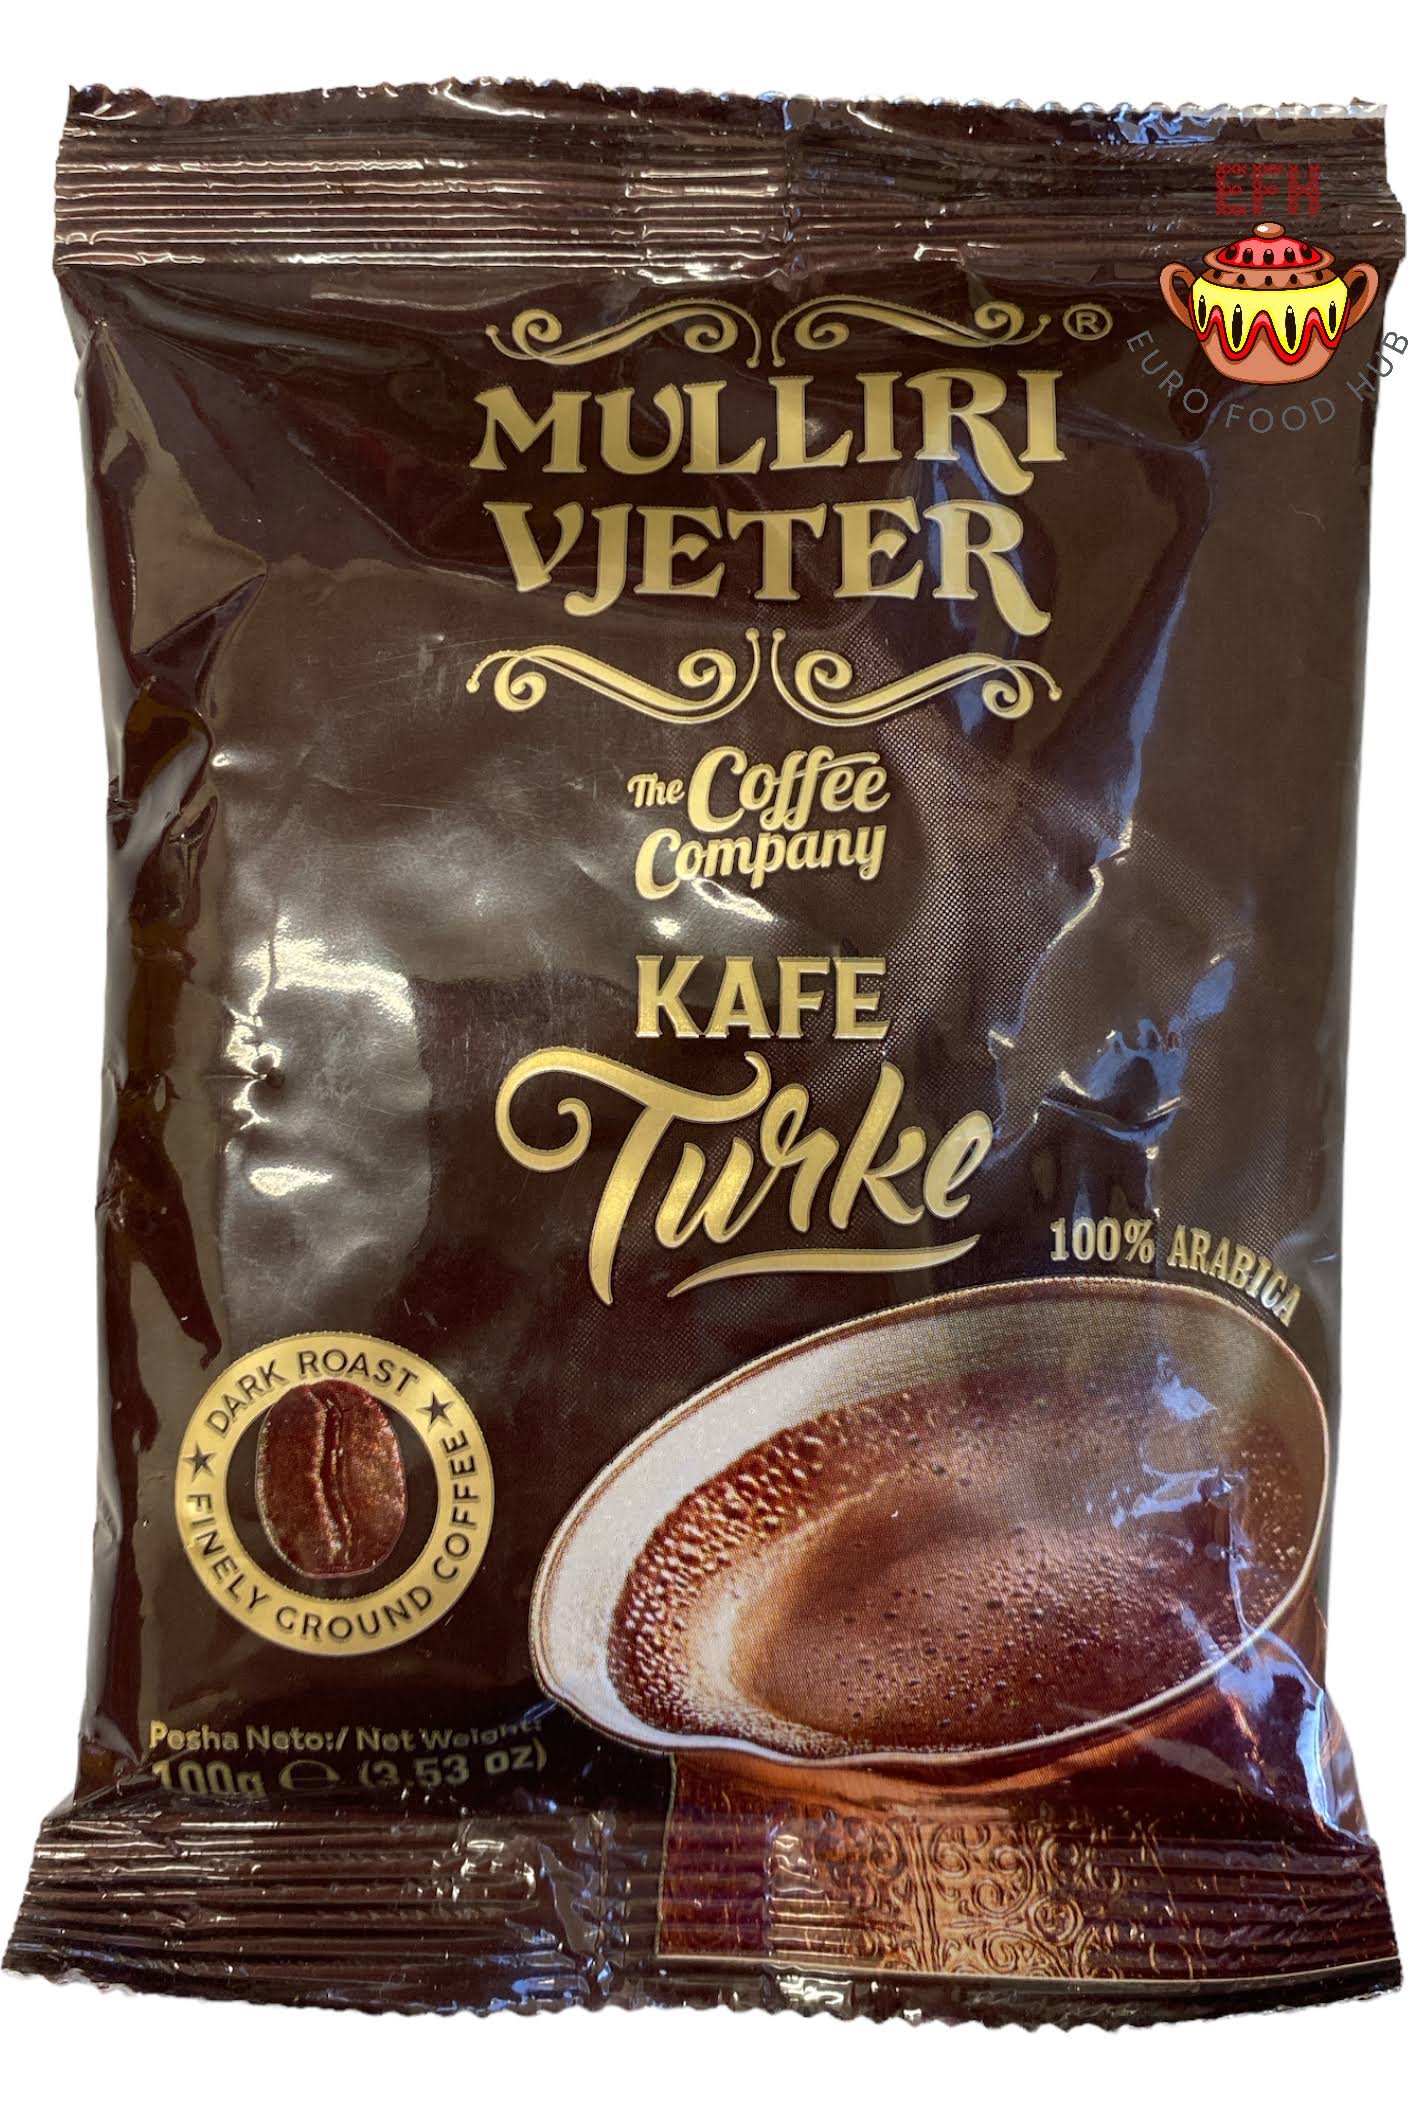 Mulliri Vjeter Albanian Turkish Style Coffee Boston USA Food Delivery